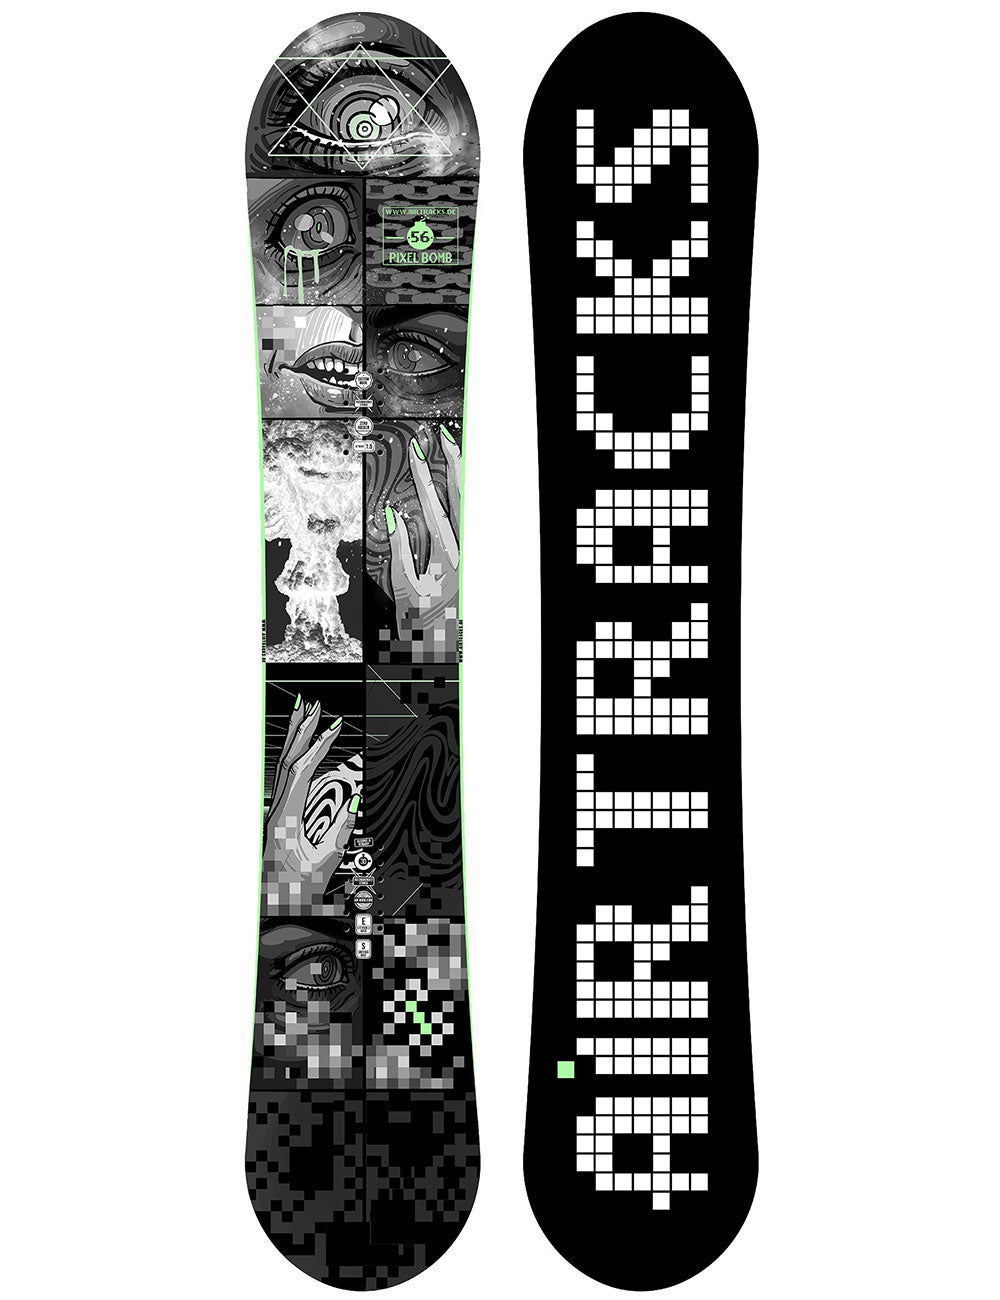 herren-snowboard-pixel-bomb-hybrid-rocker-camber-zero-flat-all-mountain-freeride-freestyle-140-145-150-155-159-160-164-163-165cm-pixelbomb1